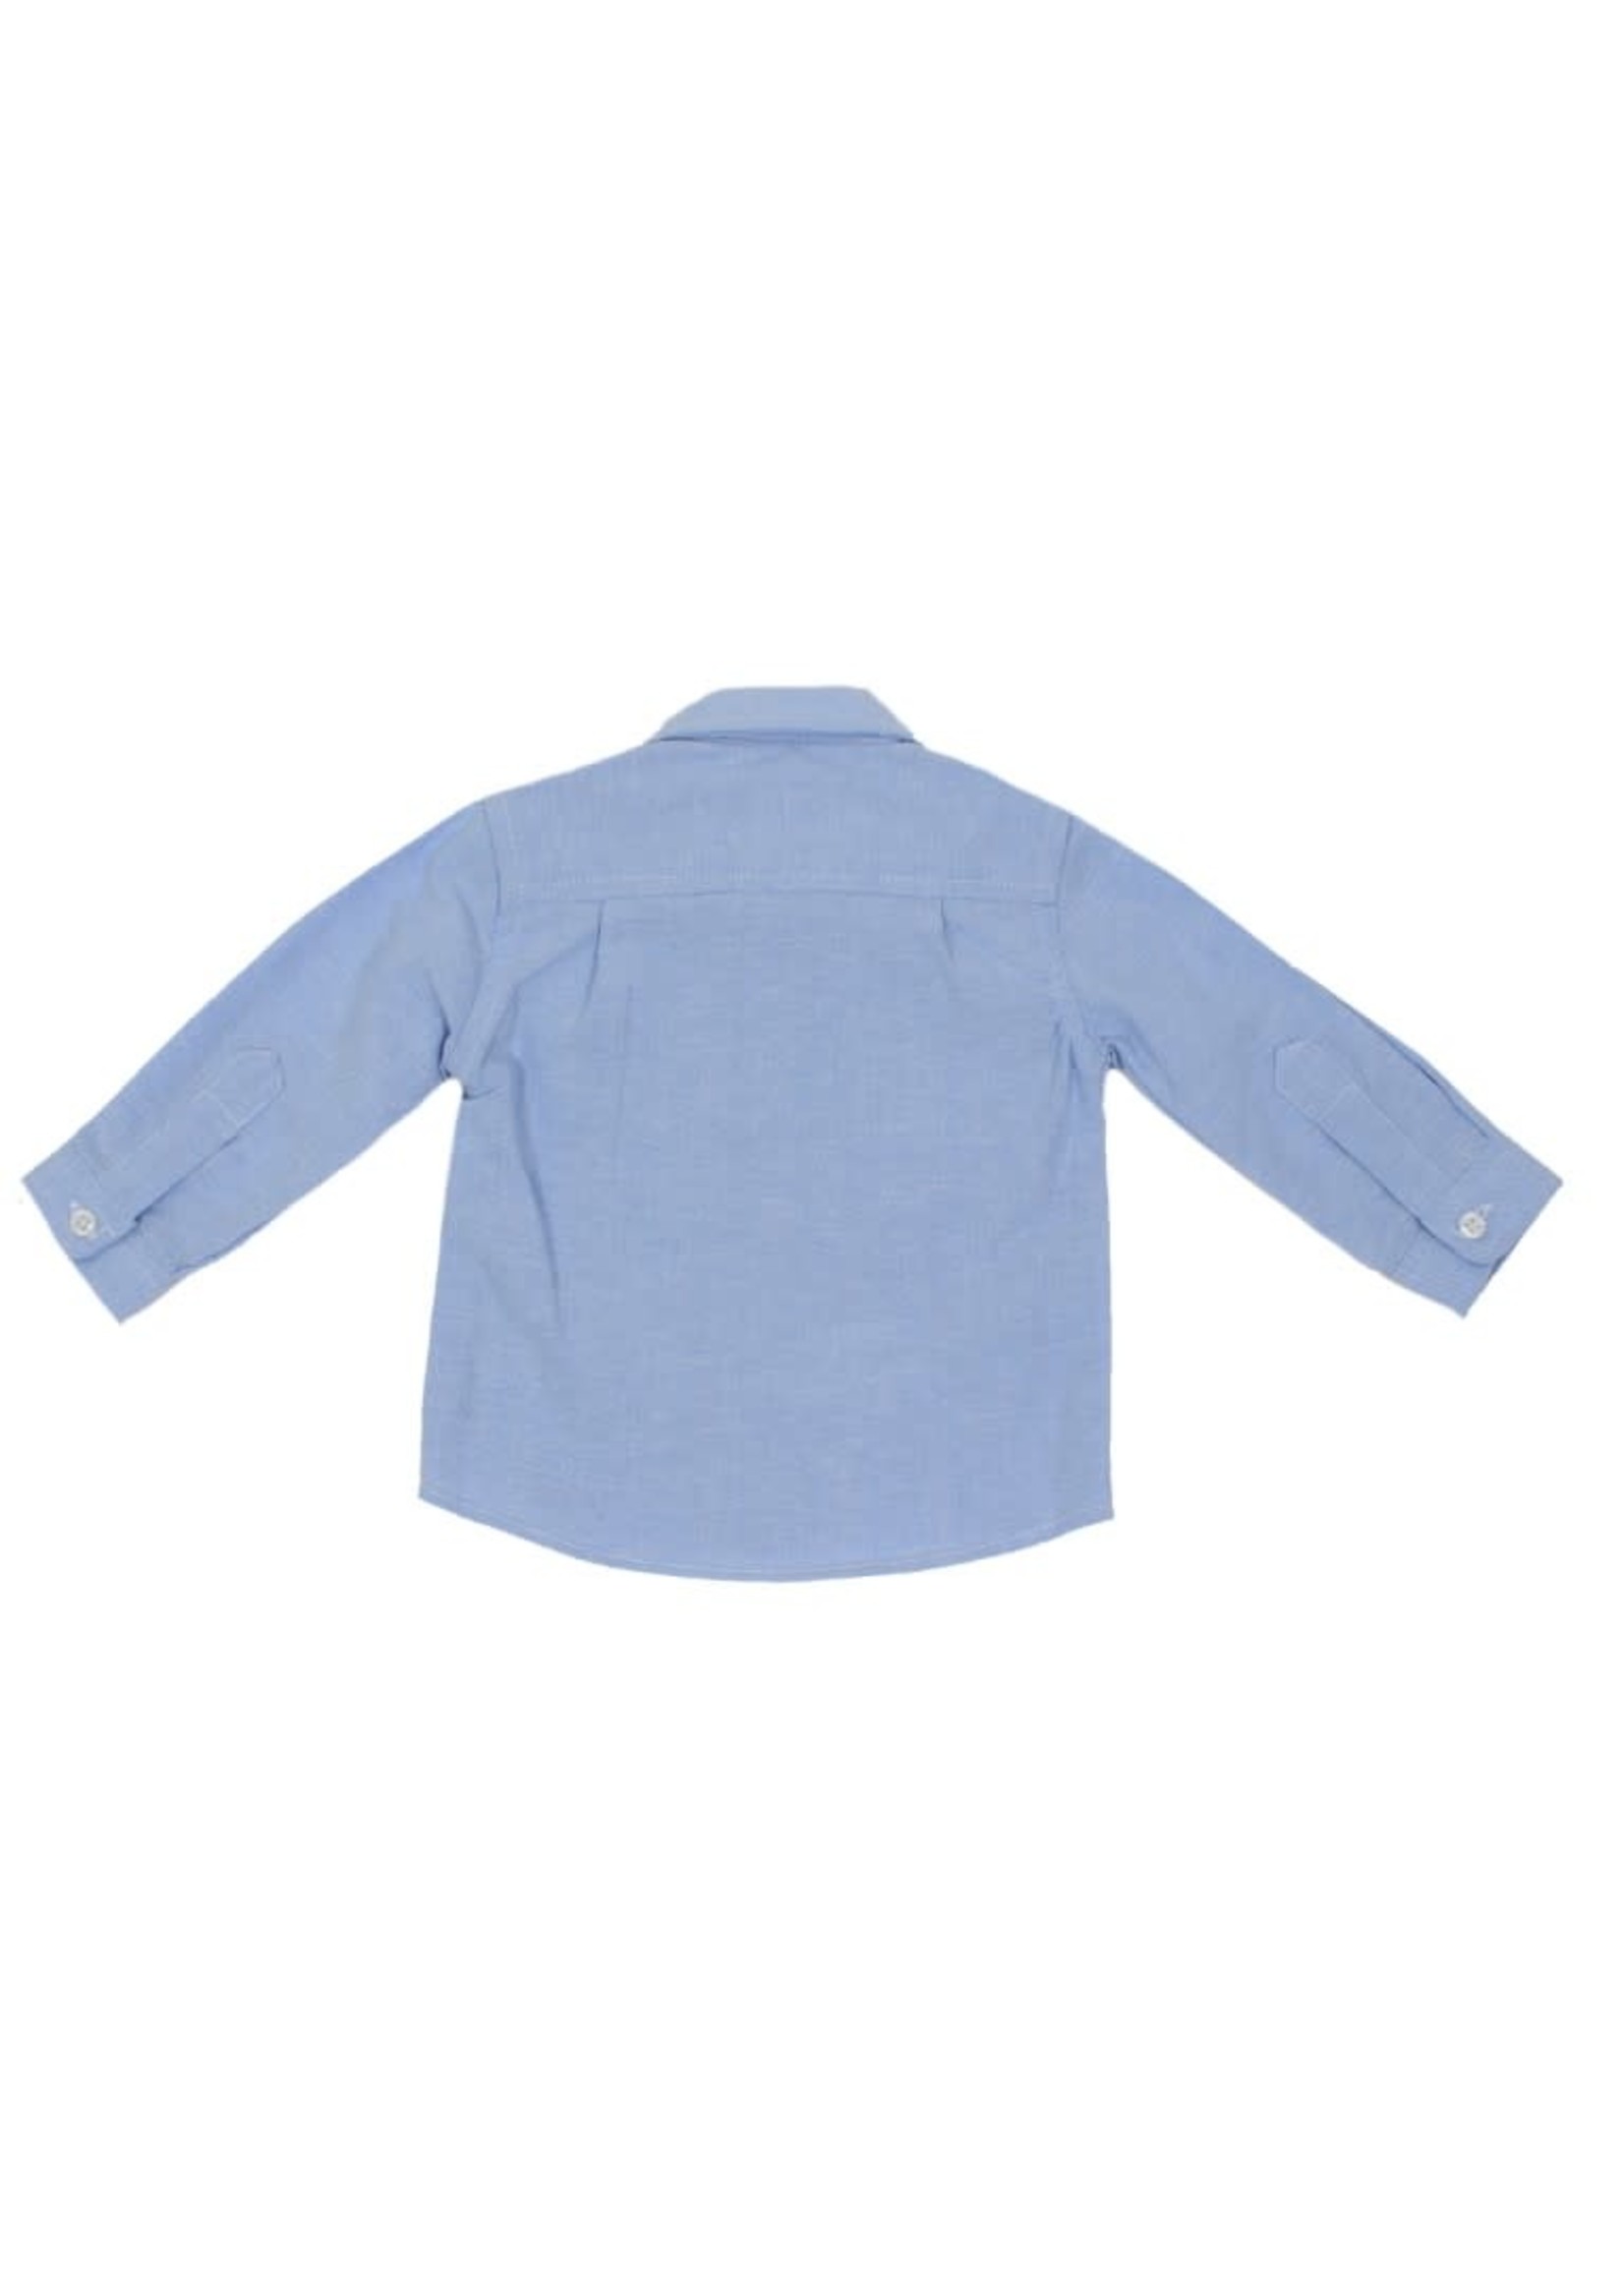 Dr Kid Baby Boy Shirt 000-Branco-DK525